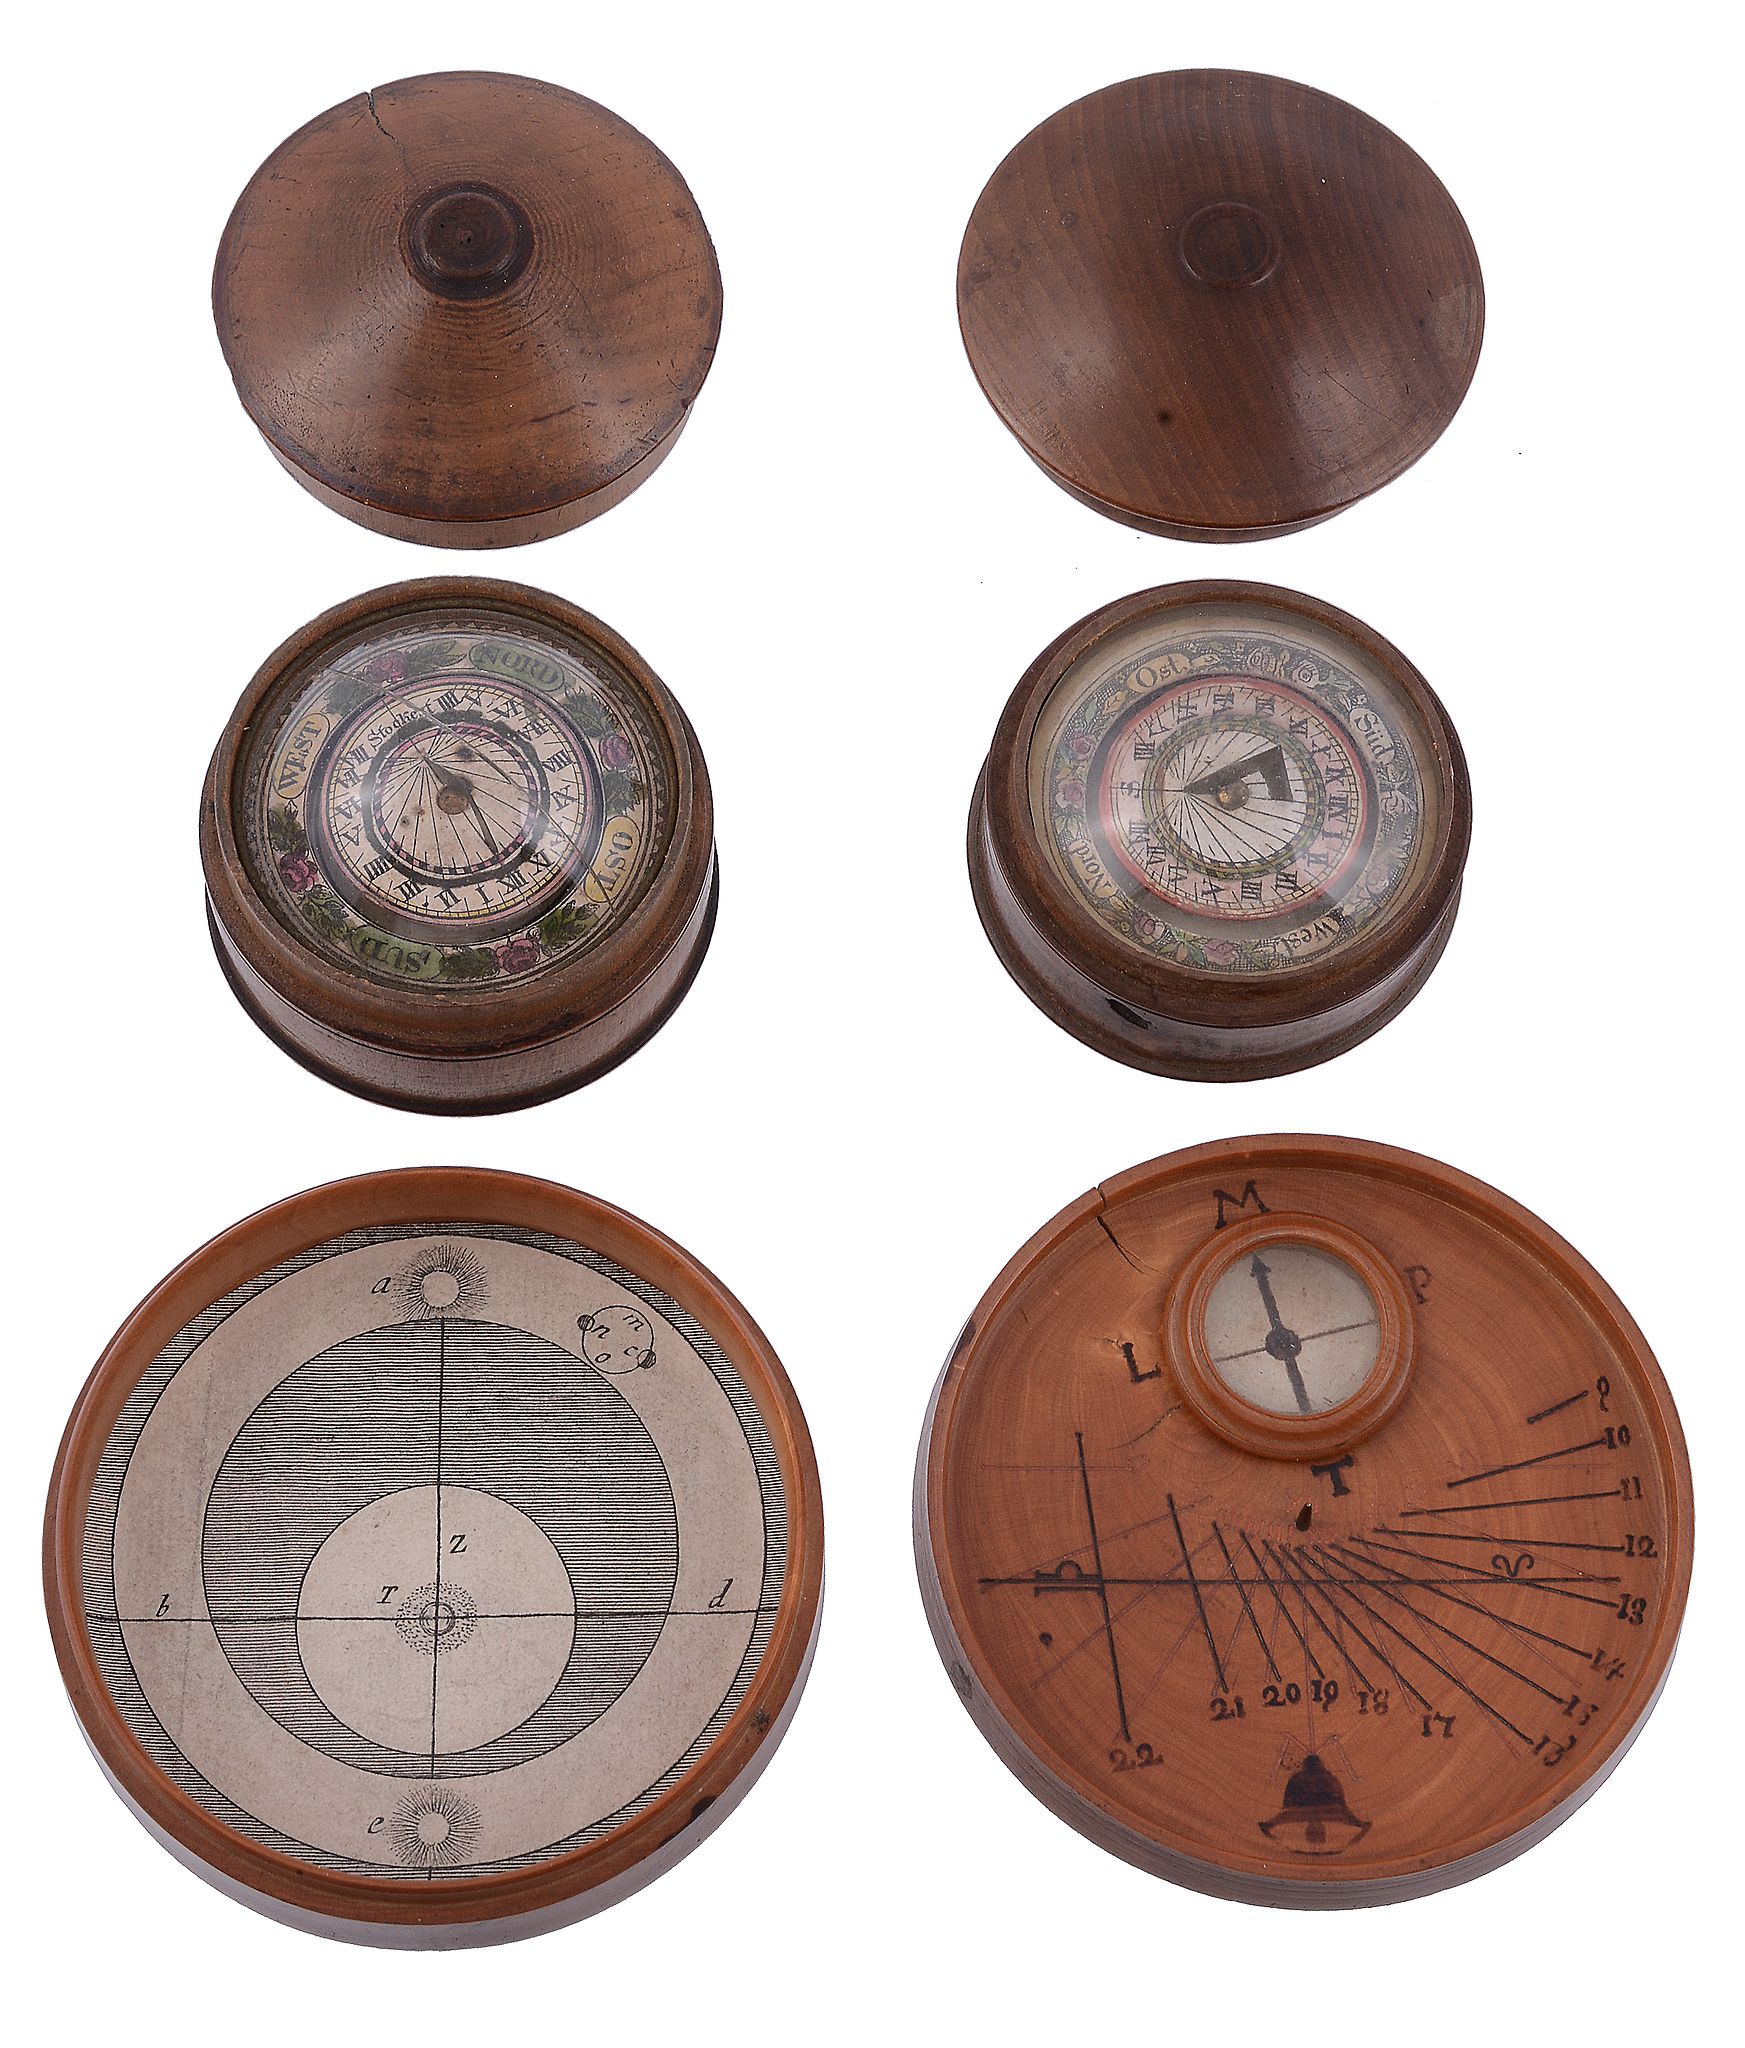 Two similar German fruitwood cased floating gnomon horizontal compass...   Two similar German